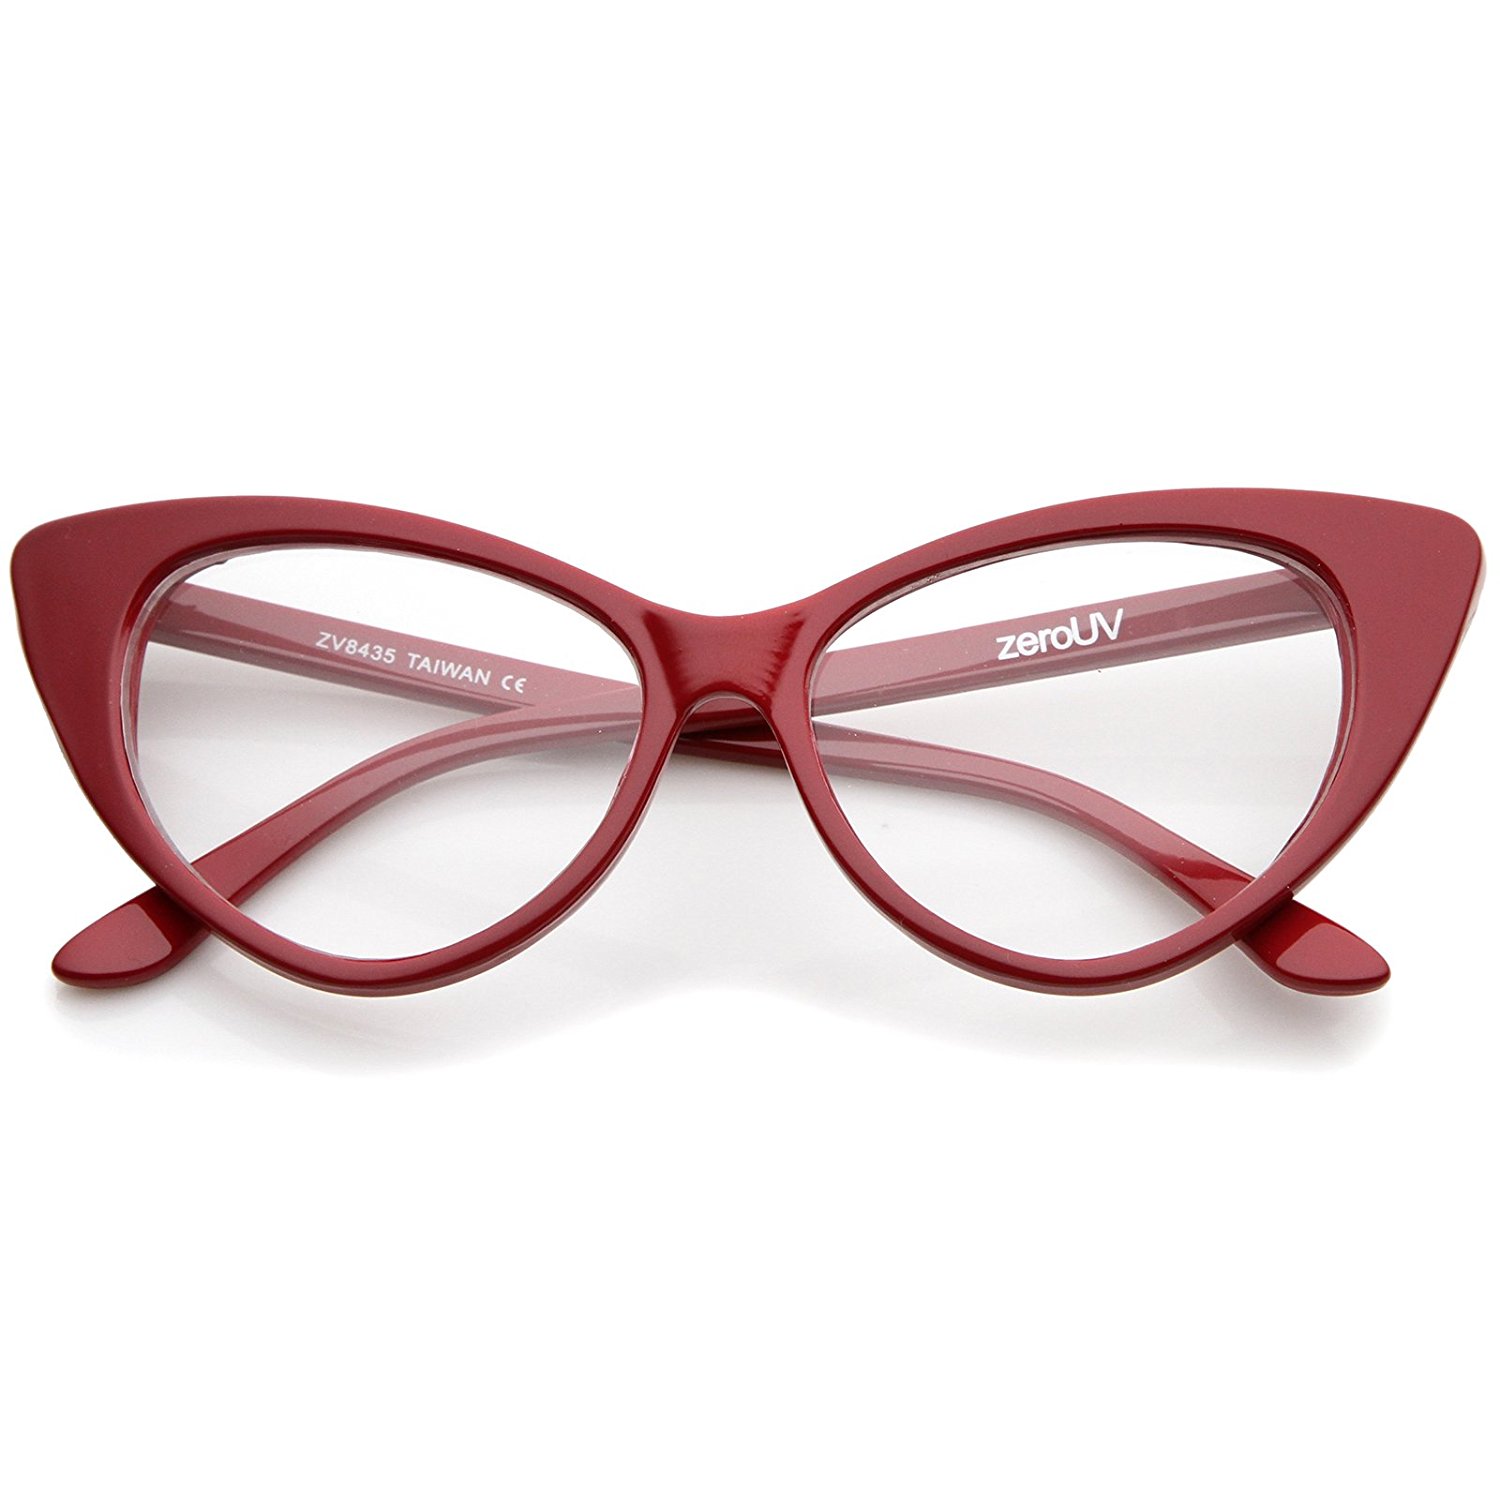 zeroUV - Super Cat Eye Glasses Vintage Inspired Mod Fashion Clear Lens Eyewear 